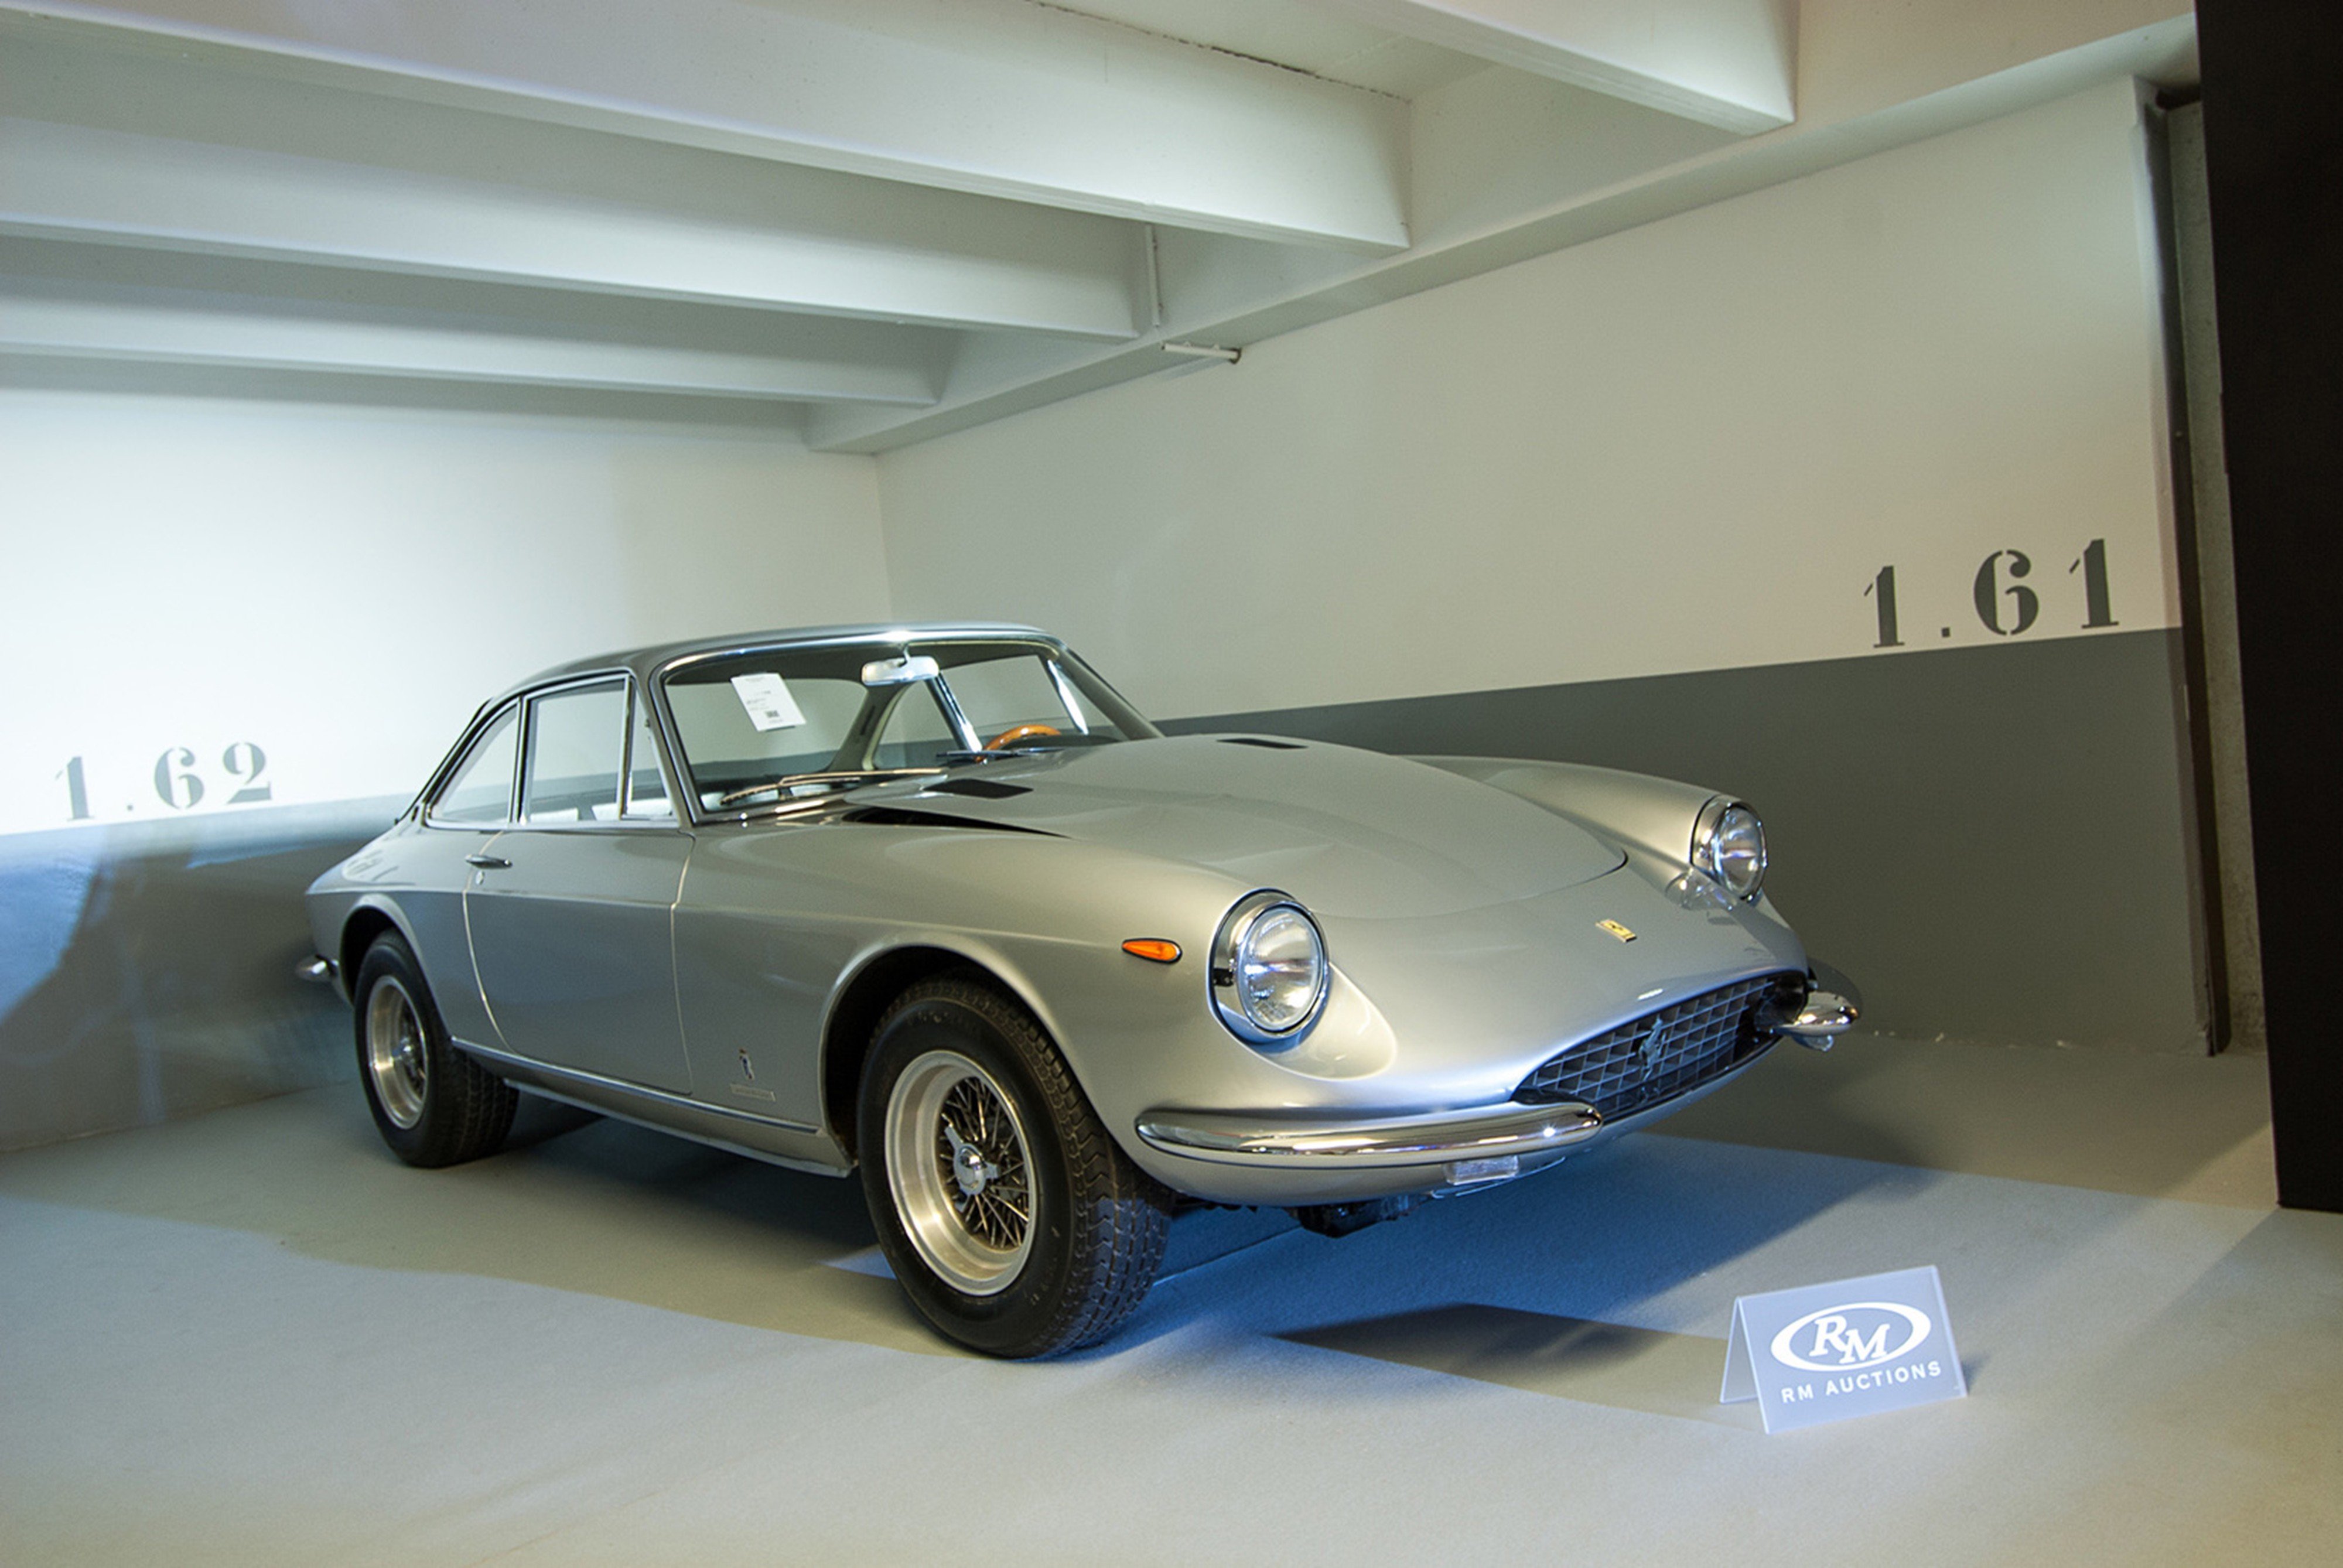 rmand039s, Auction, In, Monaco, Classic, Car, 1968, Ferrari, 365, Gtc, 4000x2677 Wallpaper